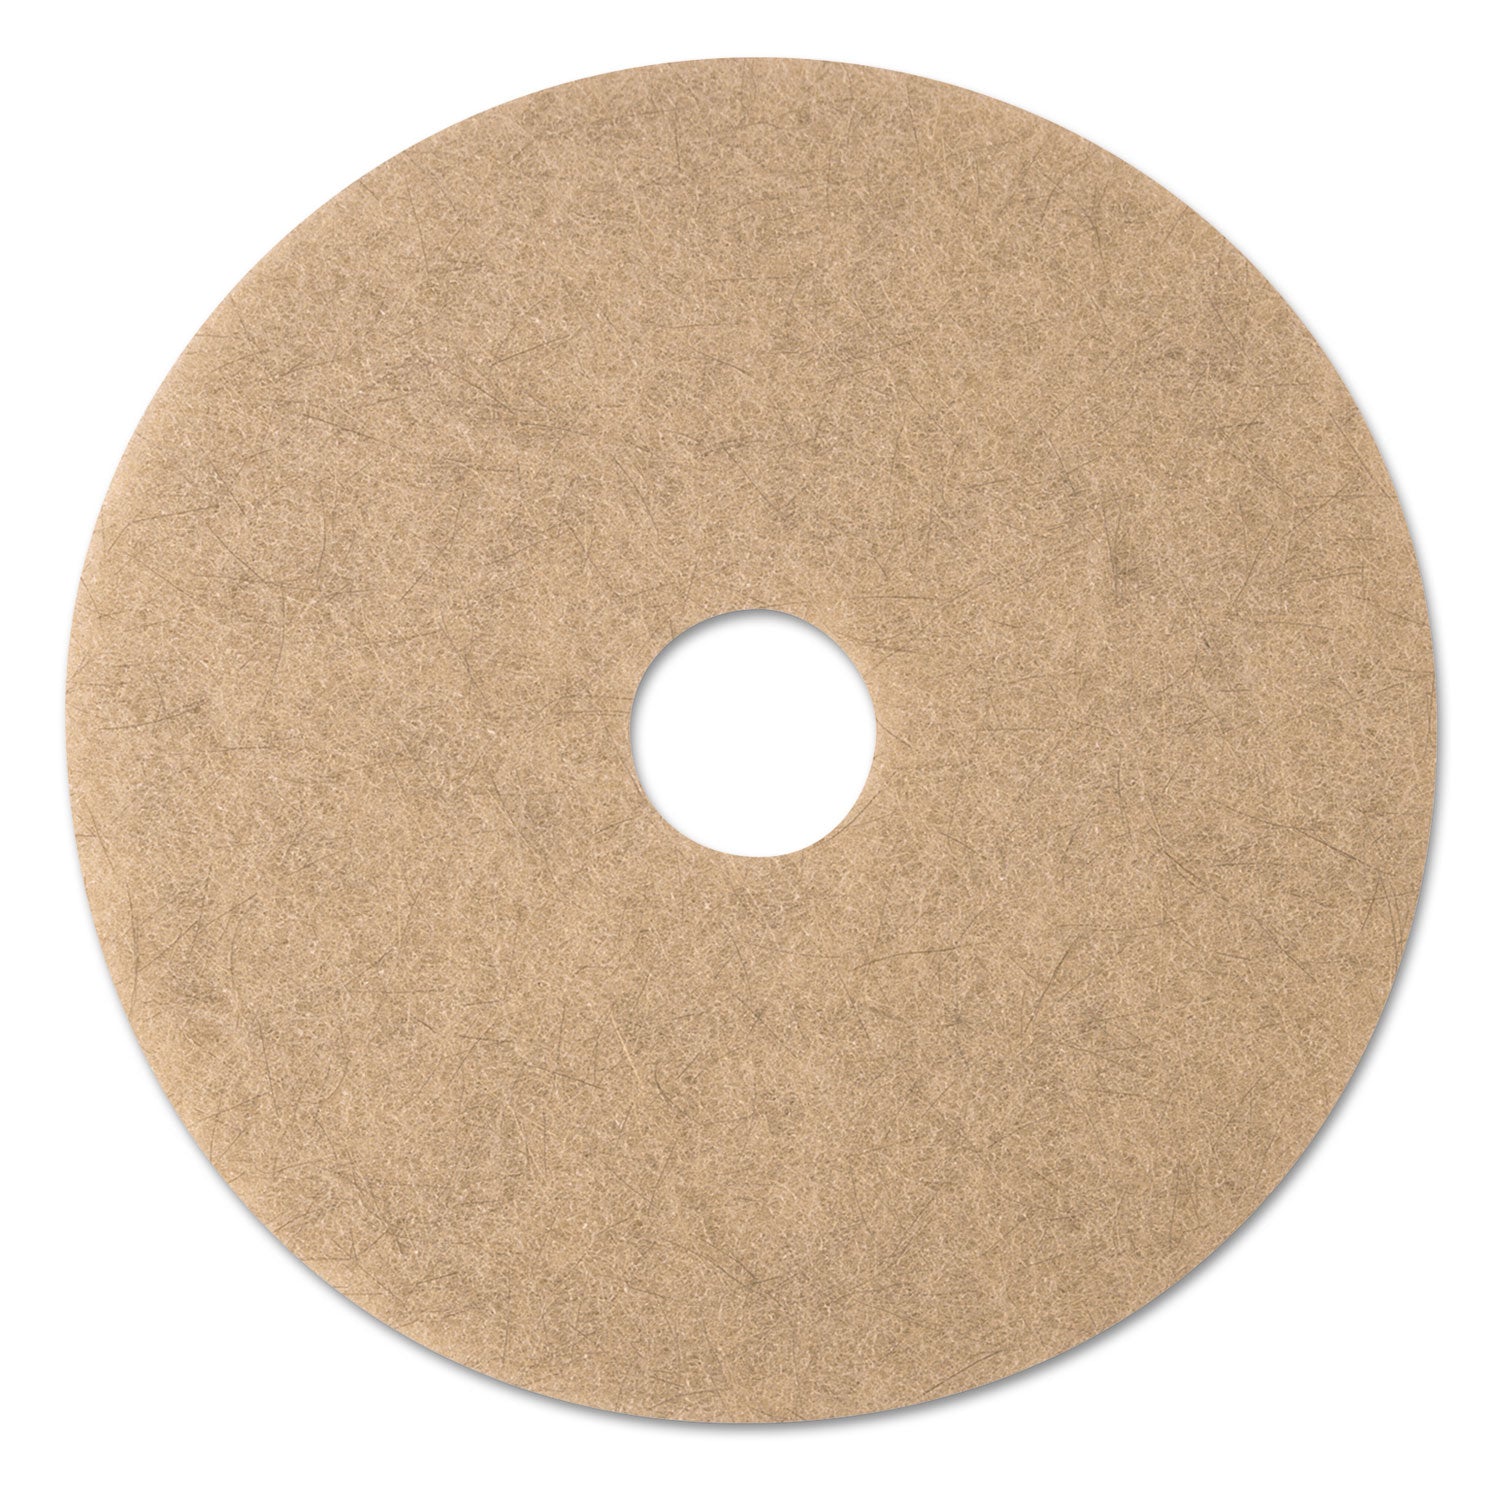 ultra-high-speed-natural-blend-floor-burnishing-pads-3500-20-diameter-tan-5-carton_mmm19008 - 1